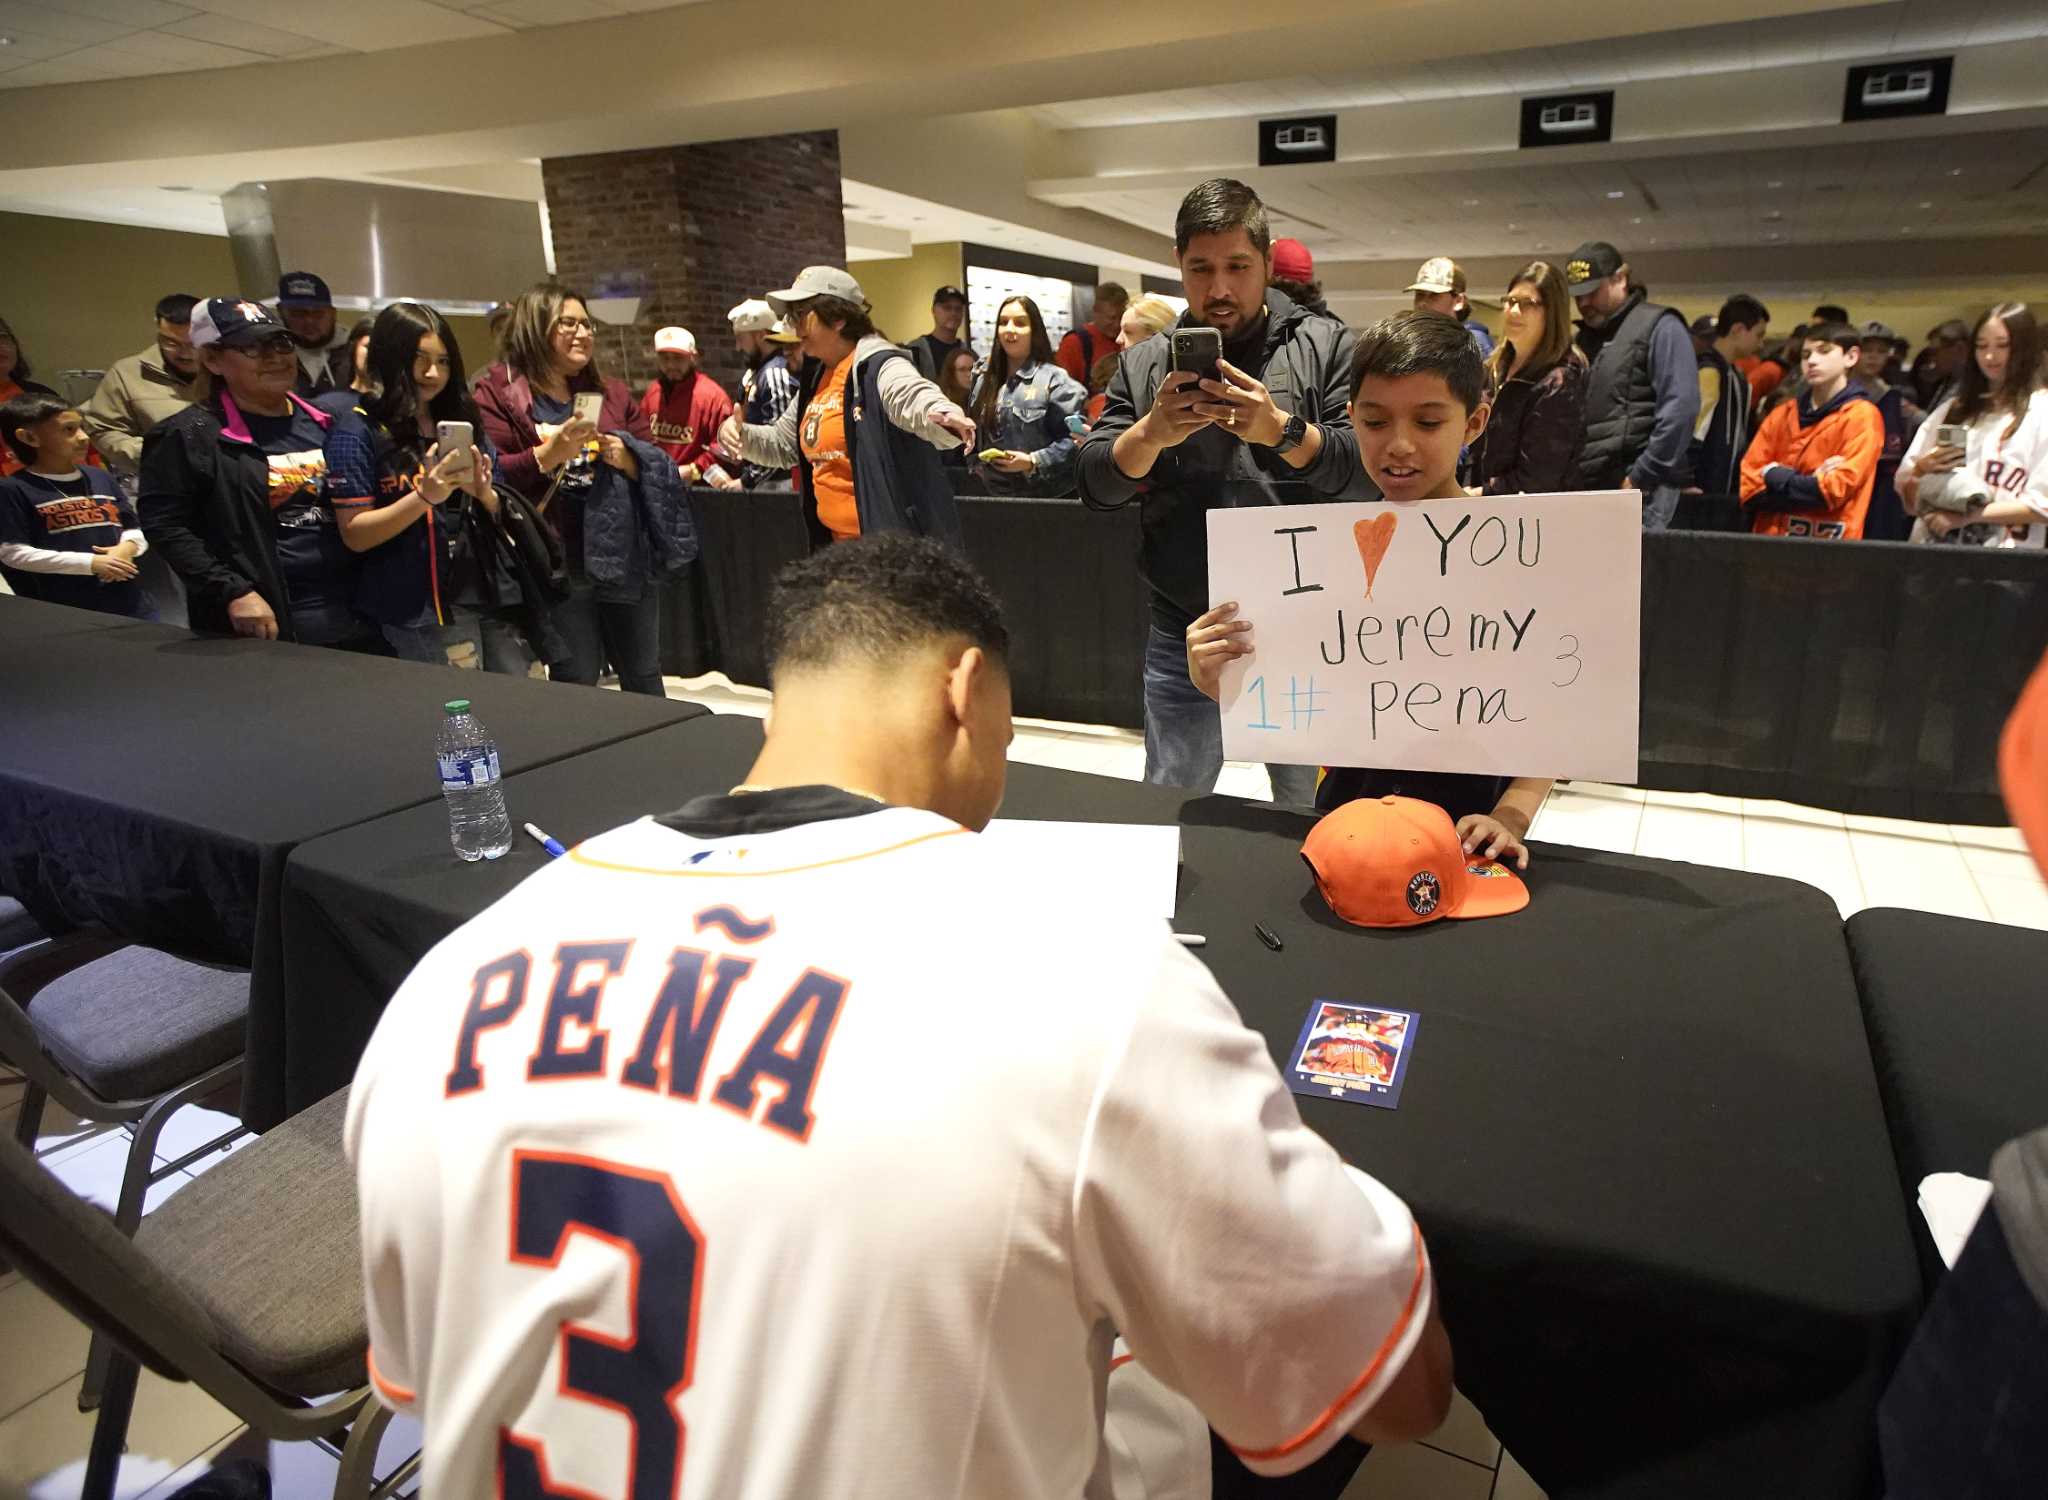 FREE shipping Jeremy Pena Love Signature Houston Astros shirt